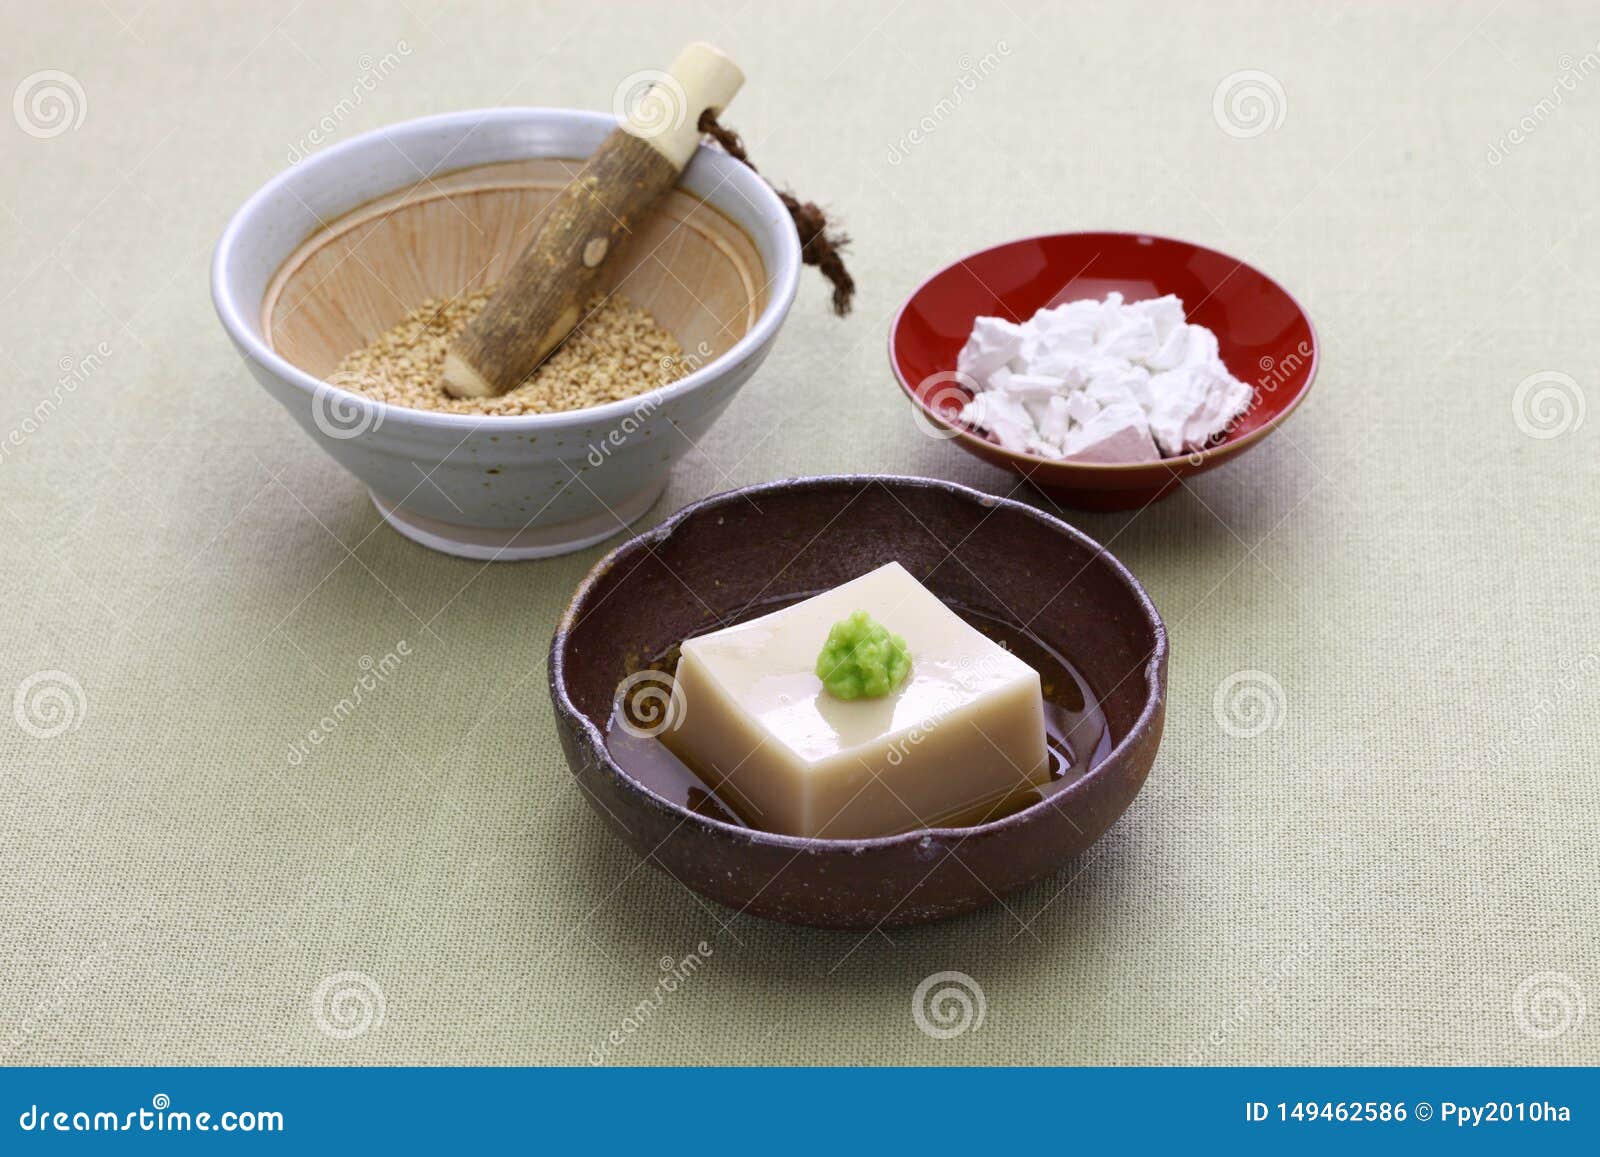 homemade sesame tofu, japanese traditional vegan cuisine